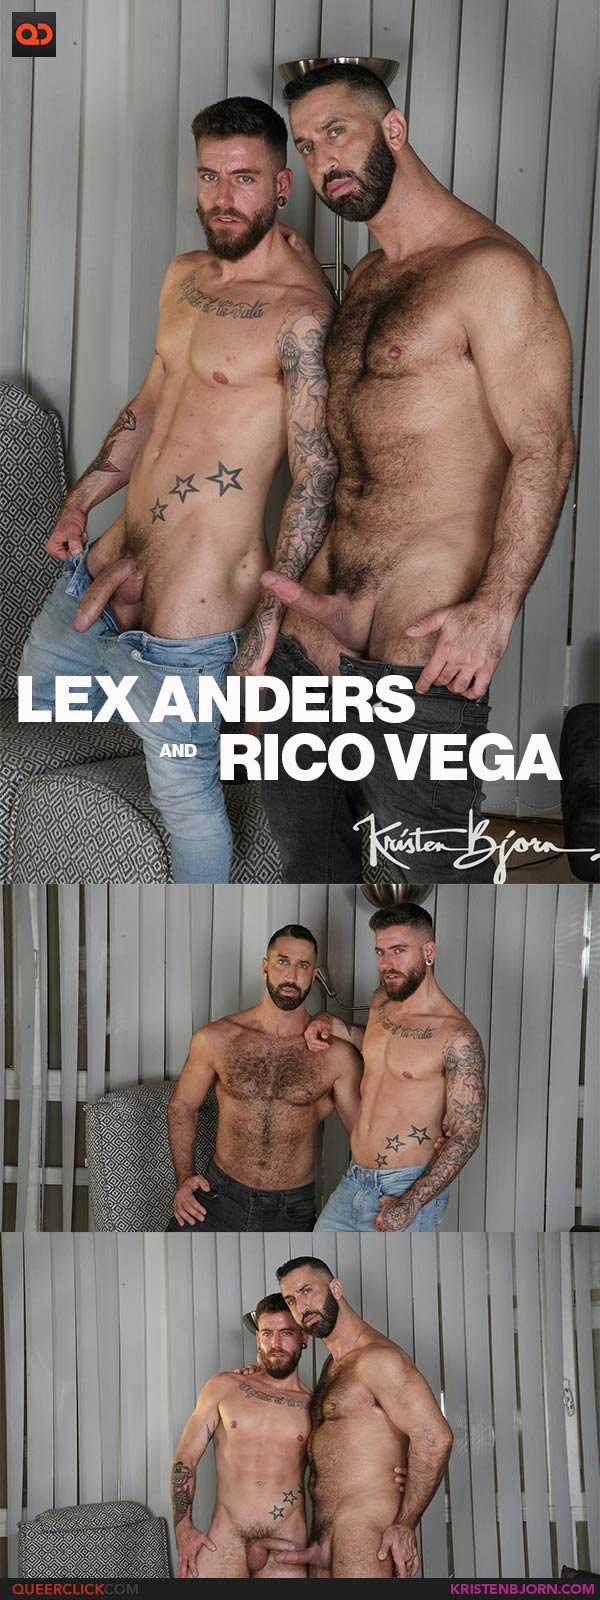 KristenBjorn: Lex Anders and Rico Vega